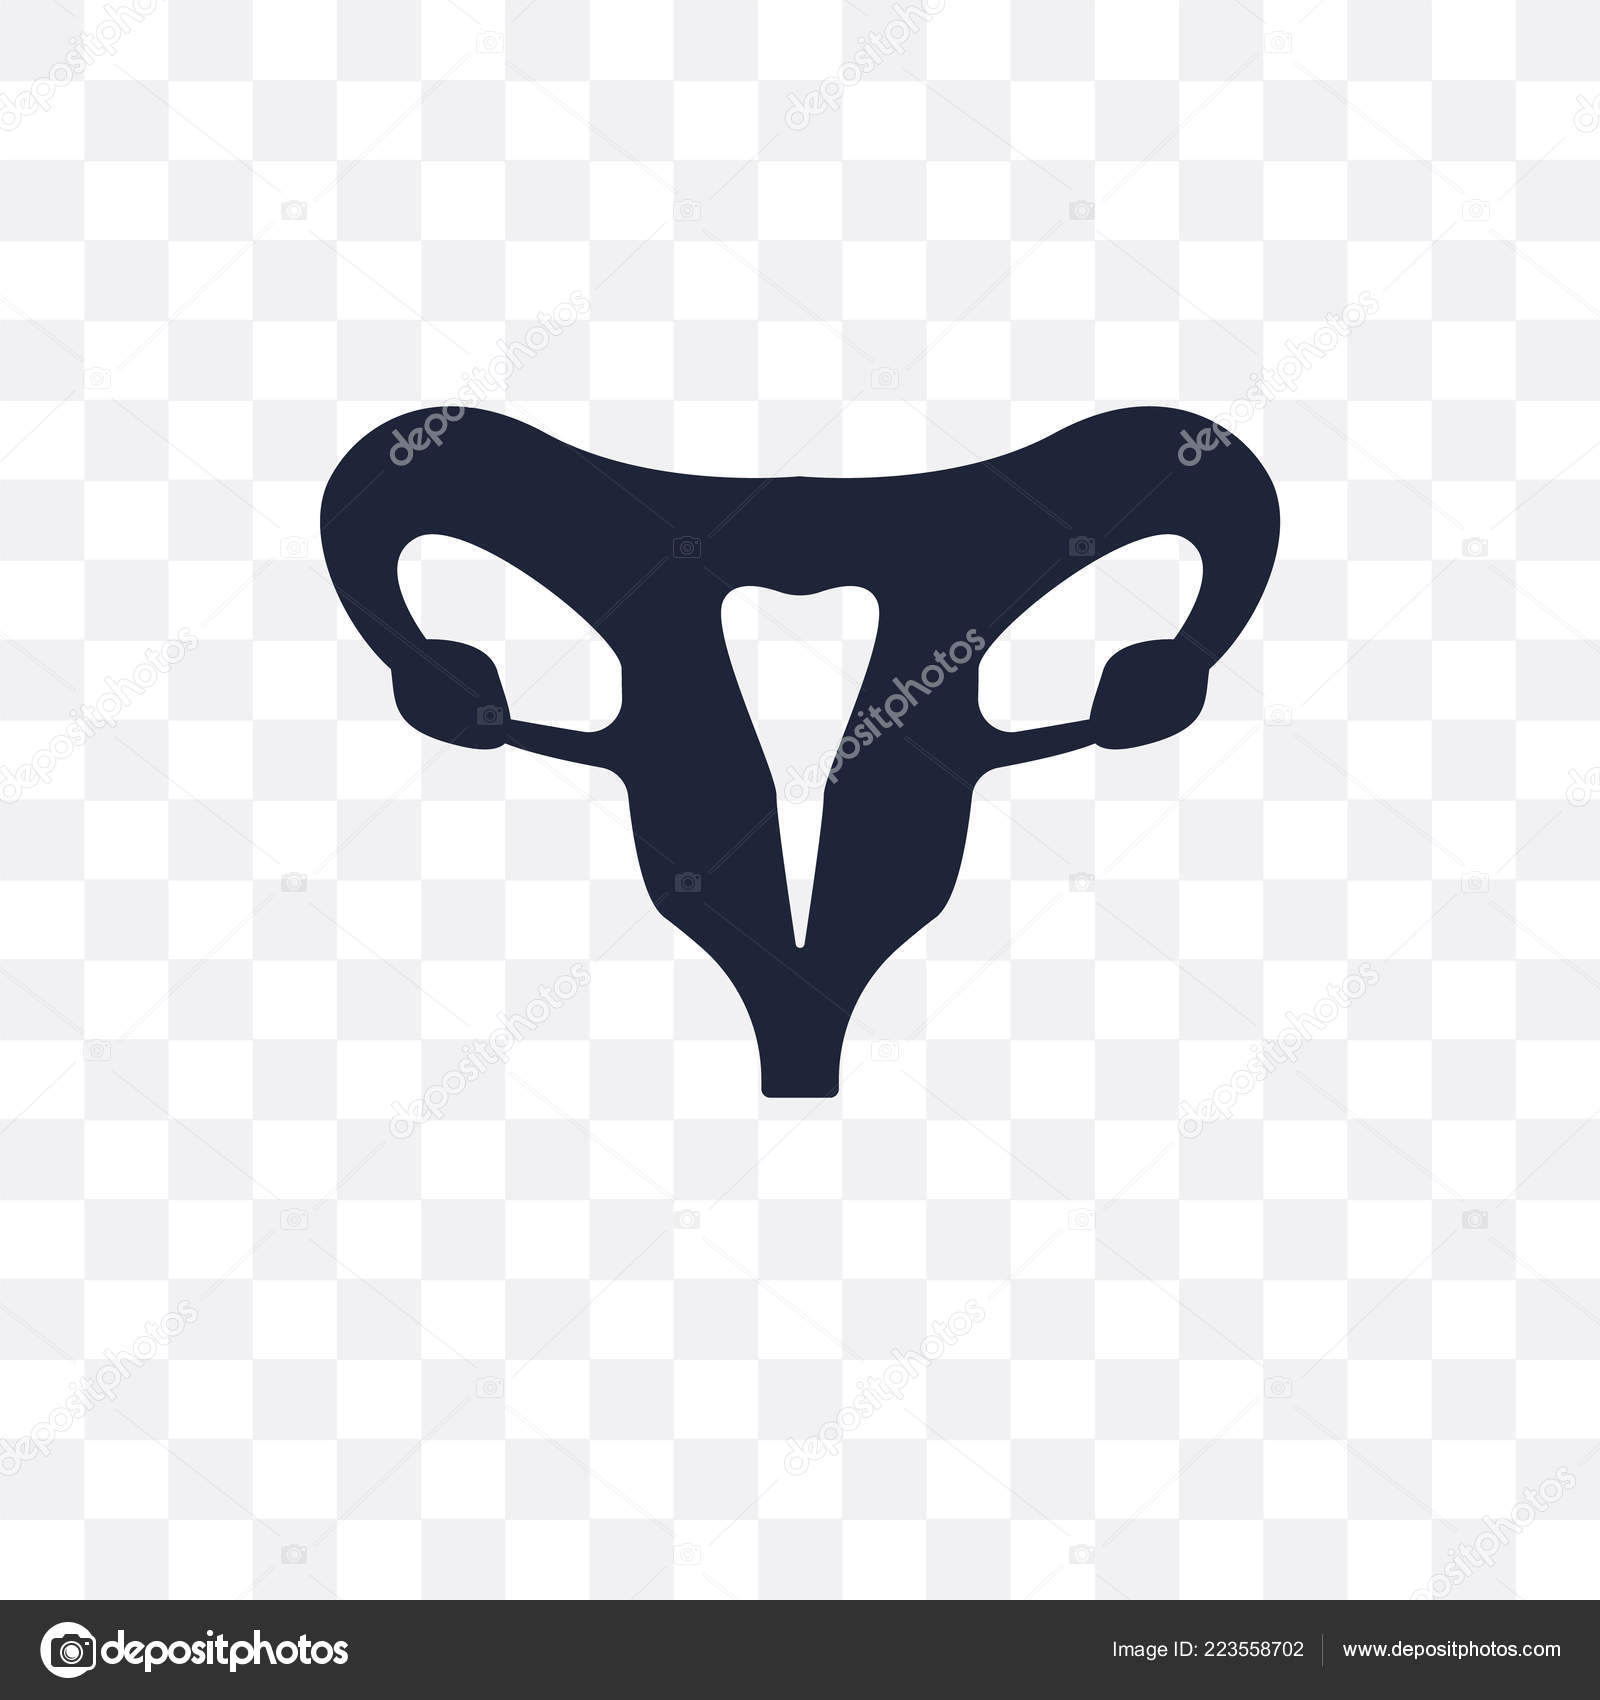 Uterus vector icon isolated on transparent background, Uterus logo design  Stock Vector